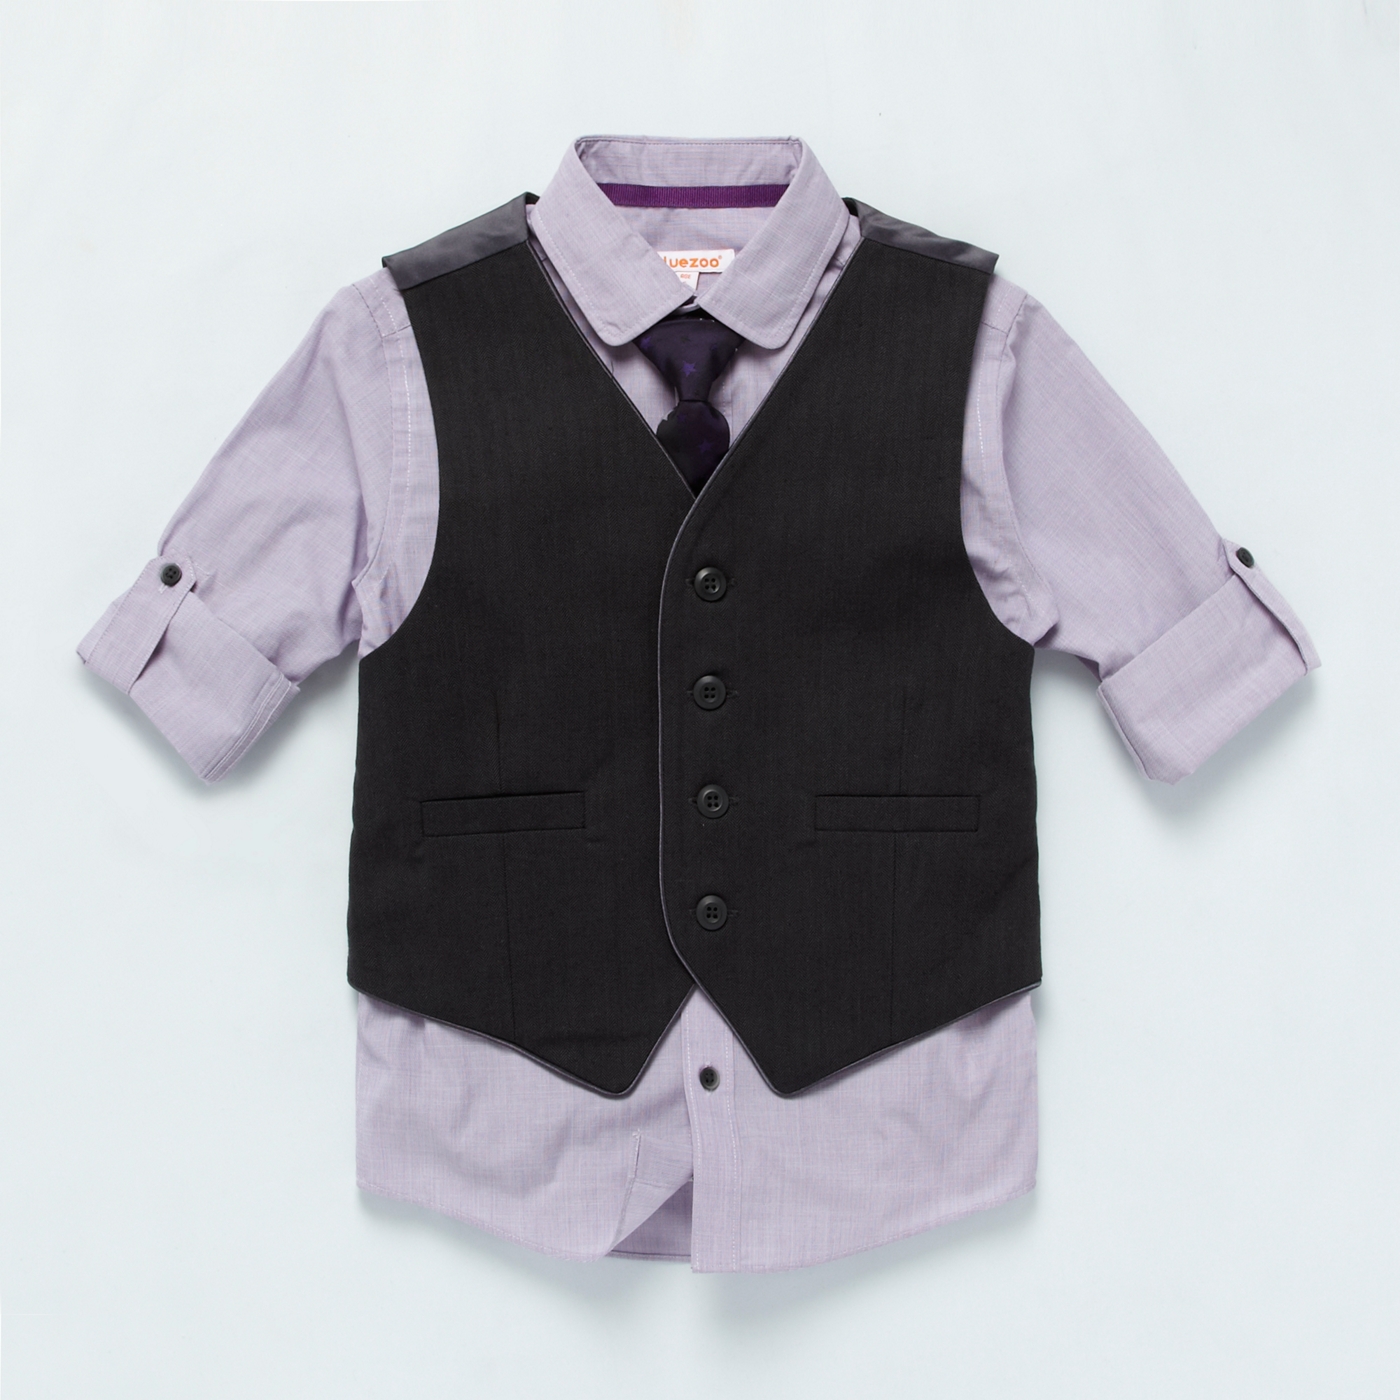 bluezoo Boys lilac dress shirt, waistcoat and tie set